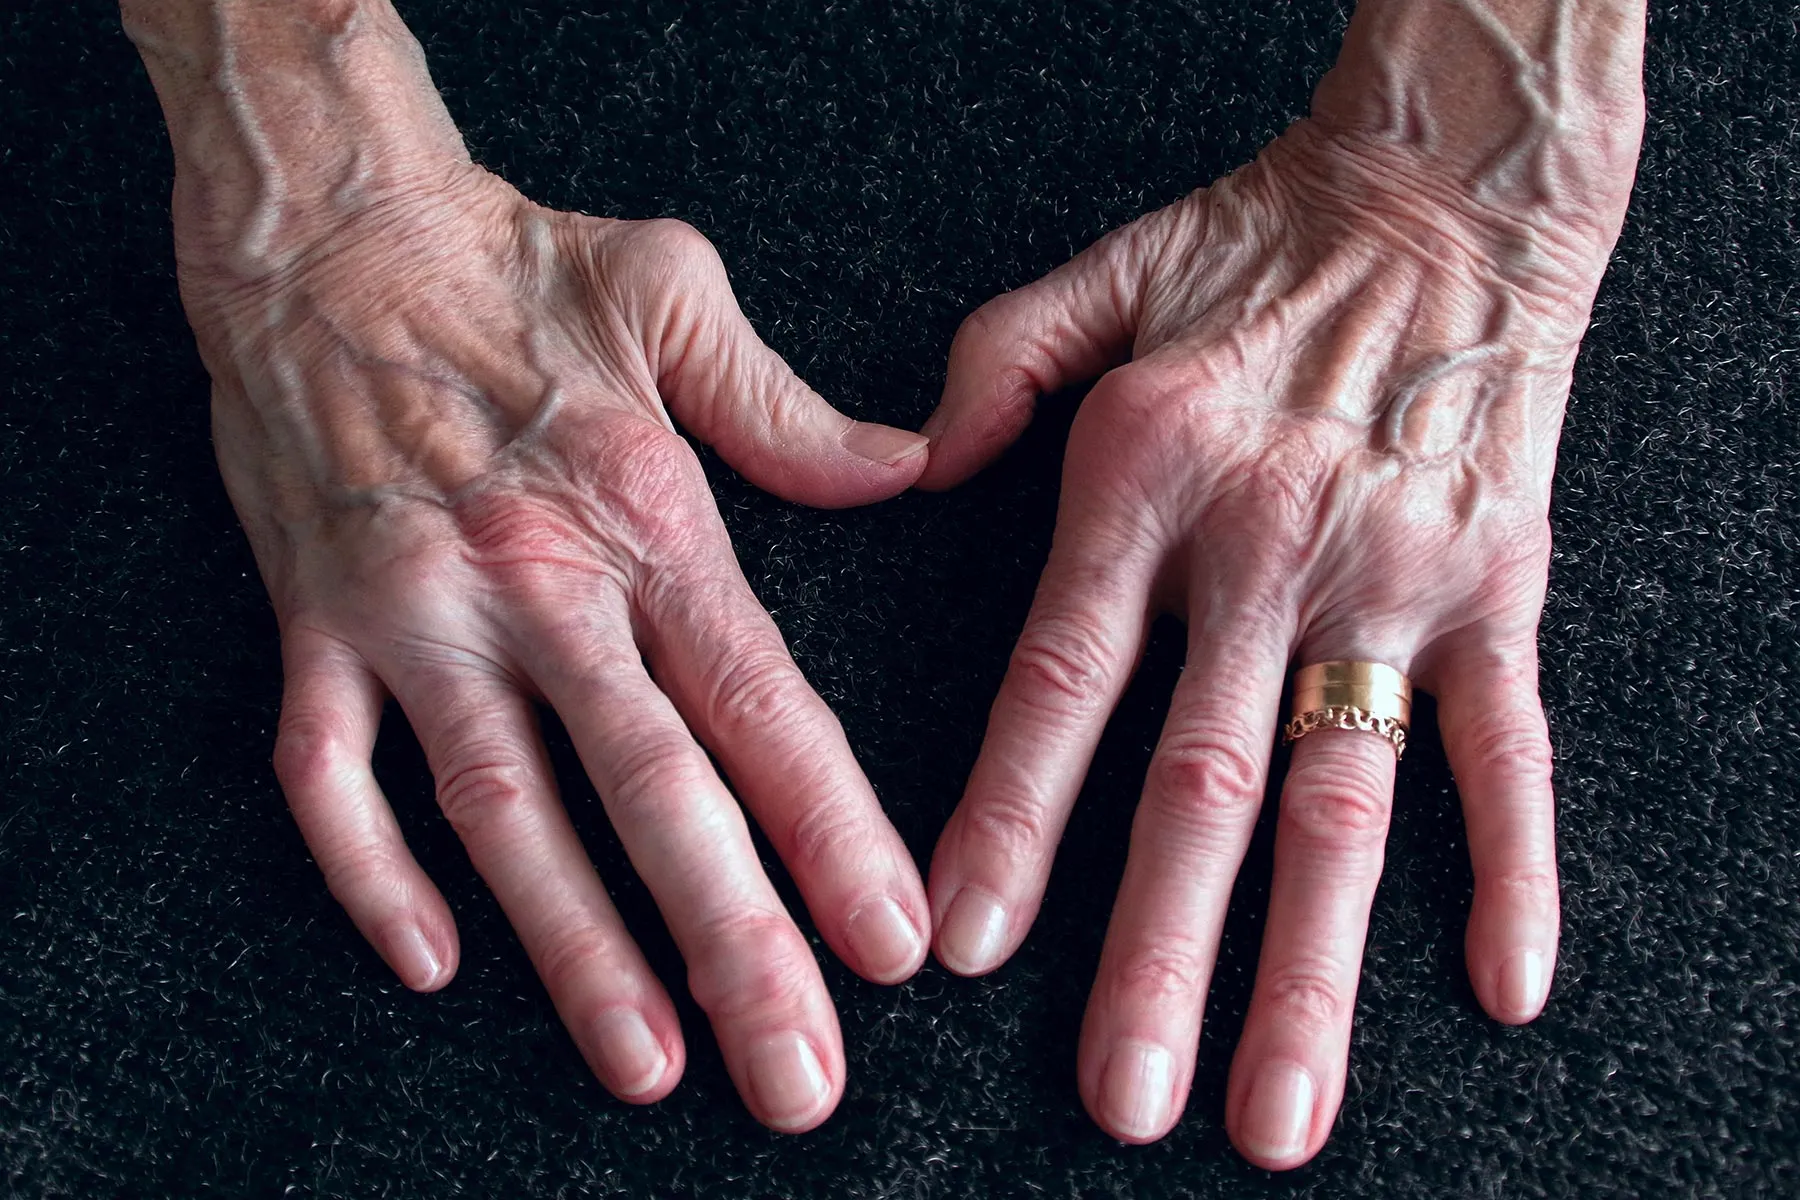 Secondhand Smoke May Raise Kids’ Rheumatoid Arthritis Risk